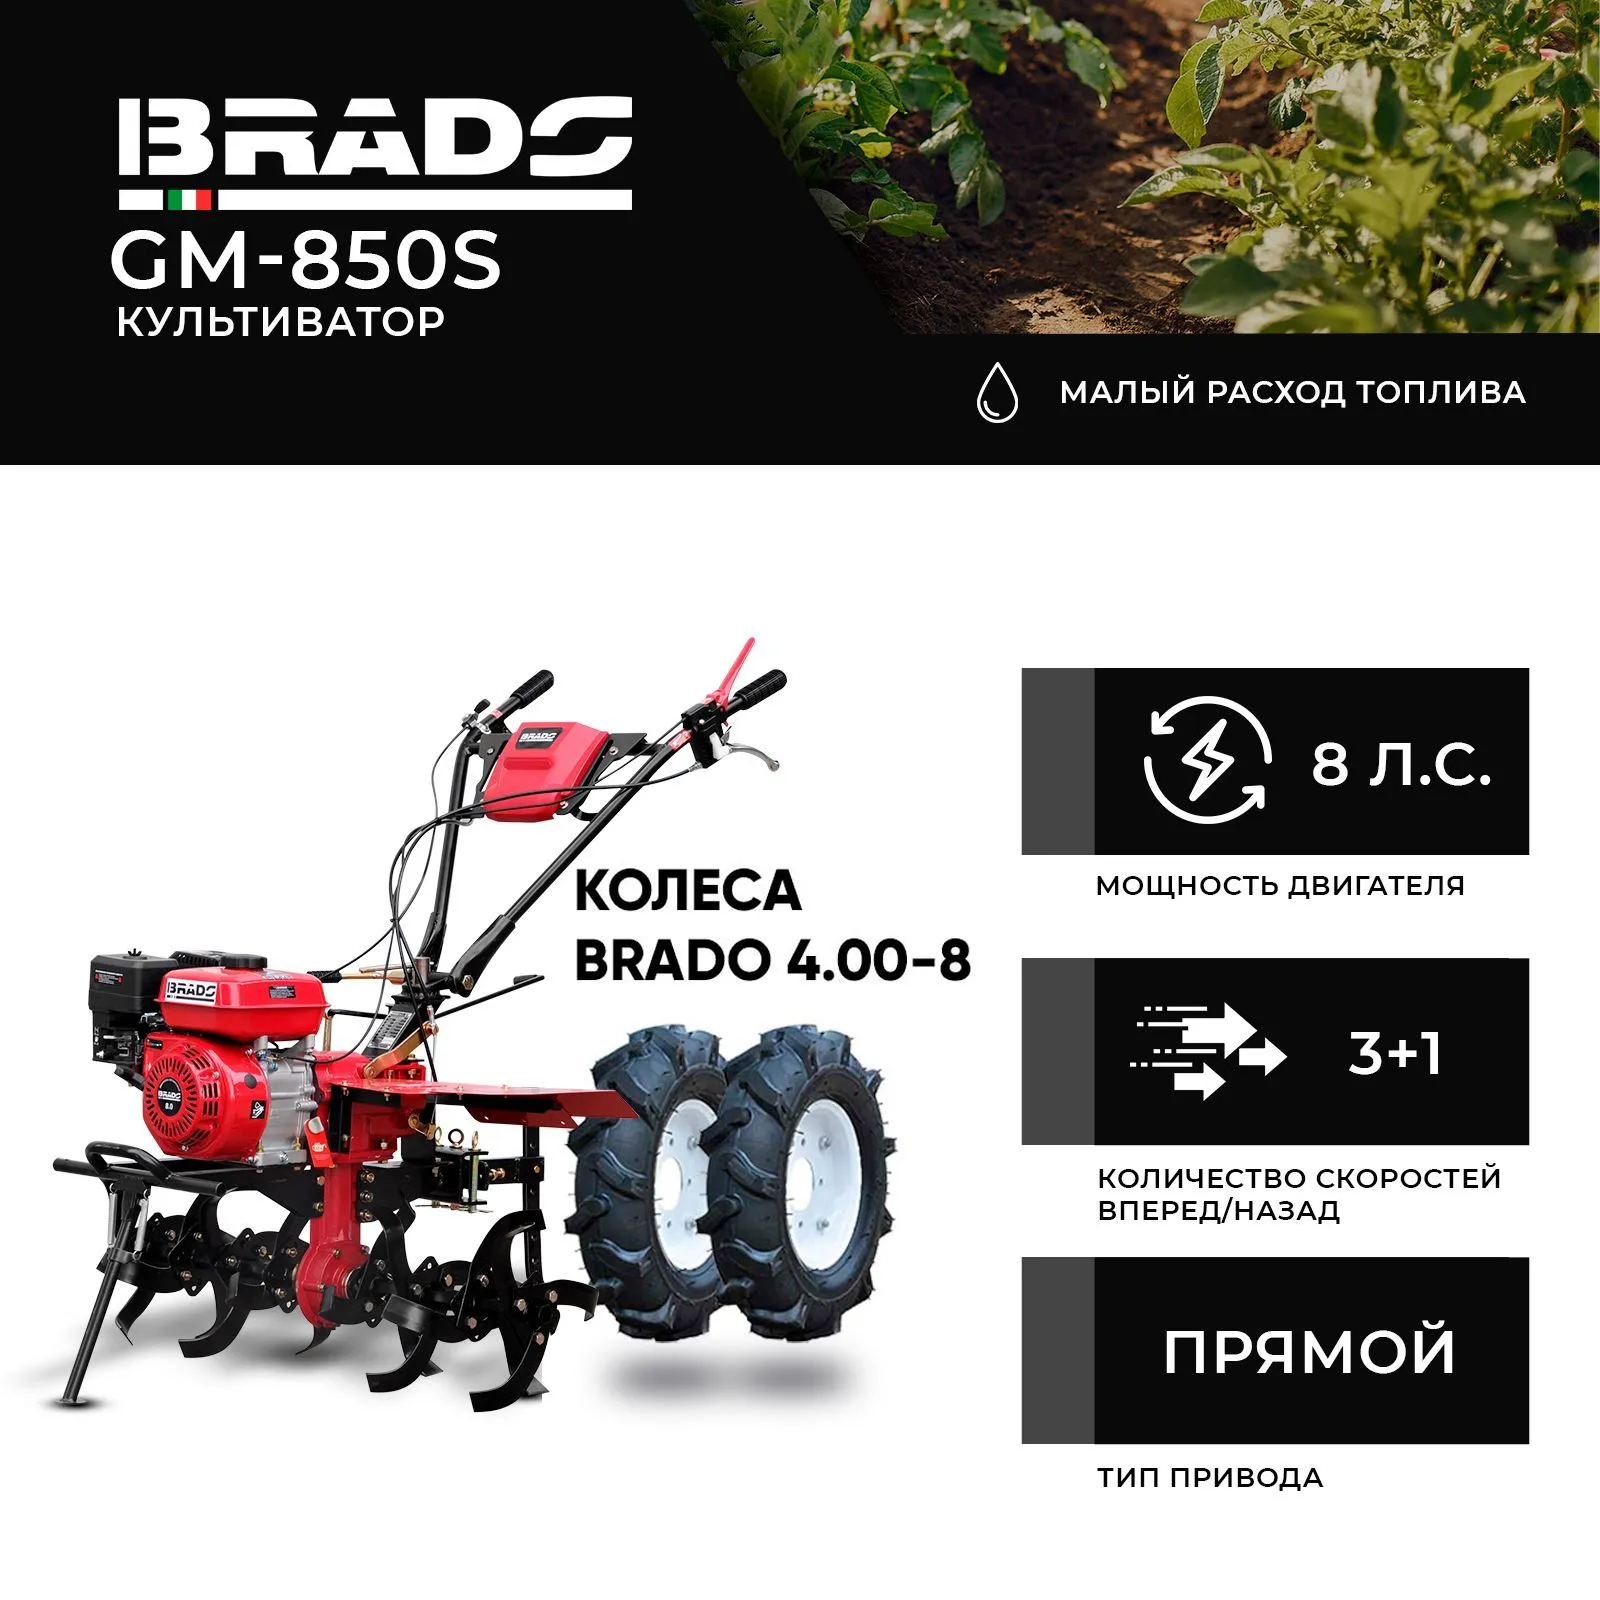 Brado GM-850S + колеса Brado 4.00-8 (2000290880014)